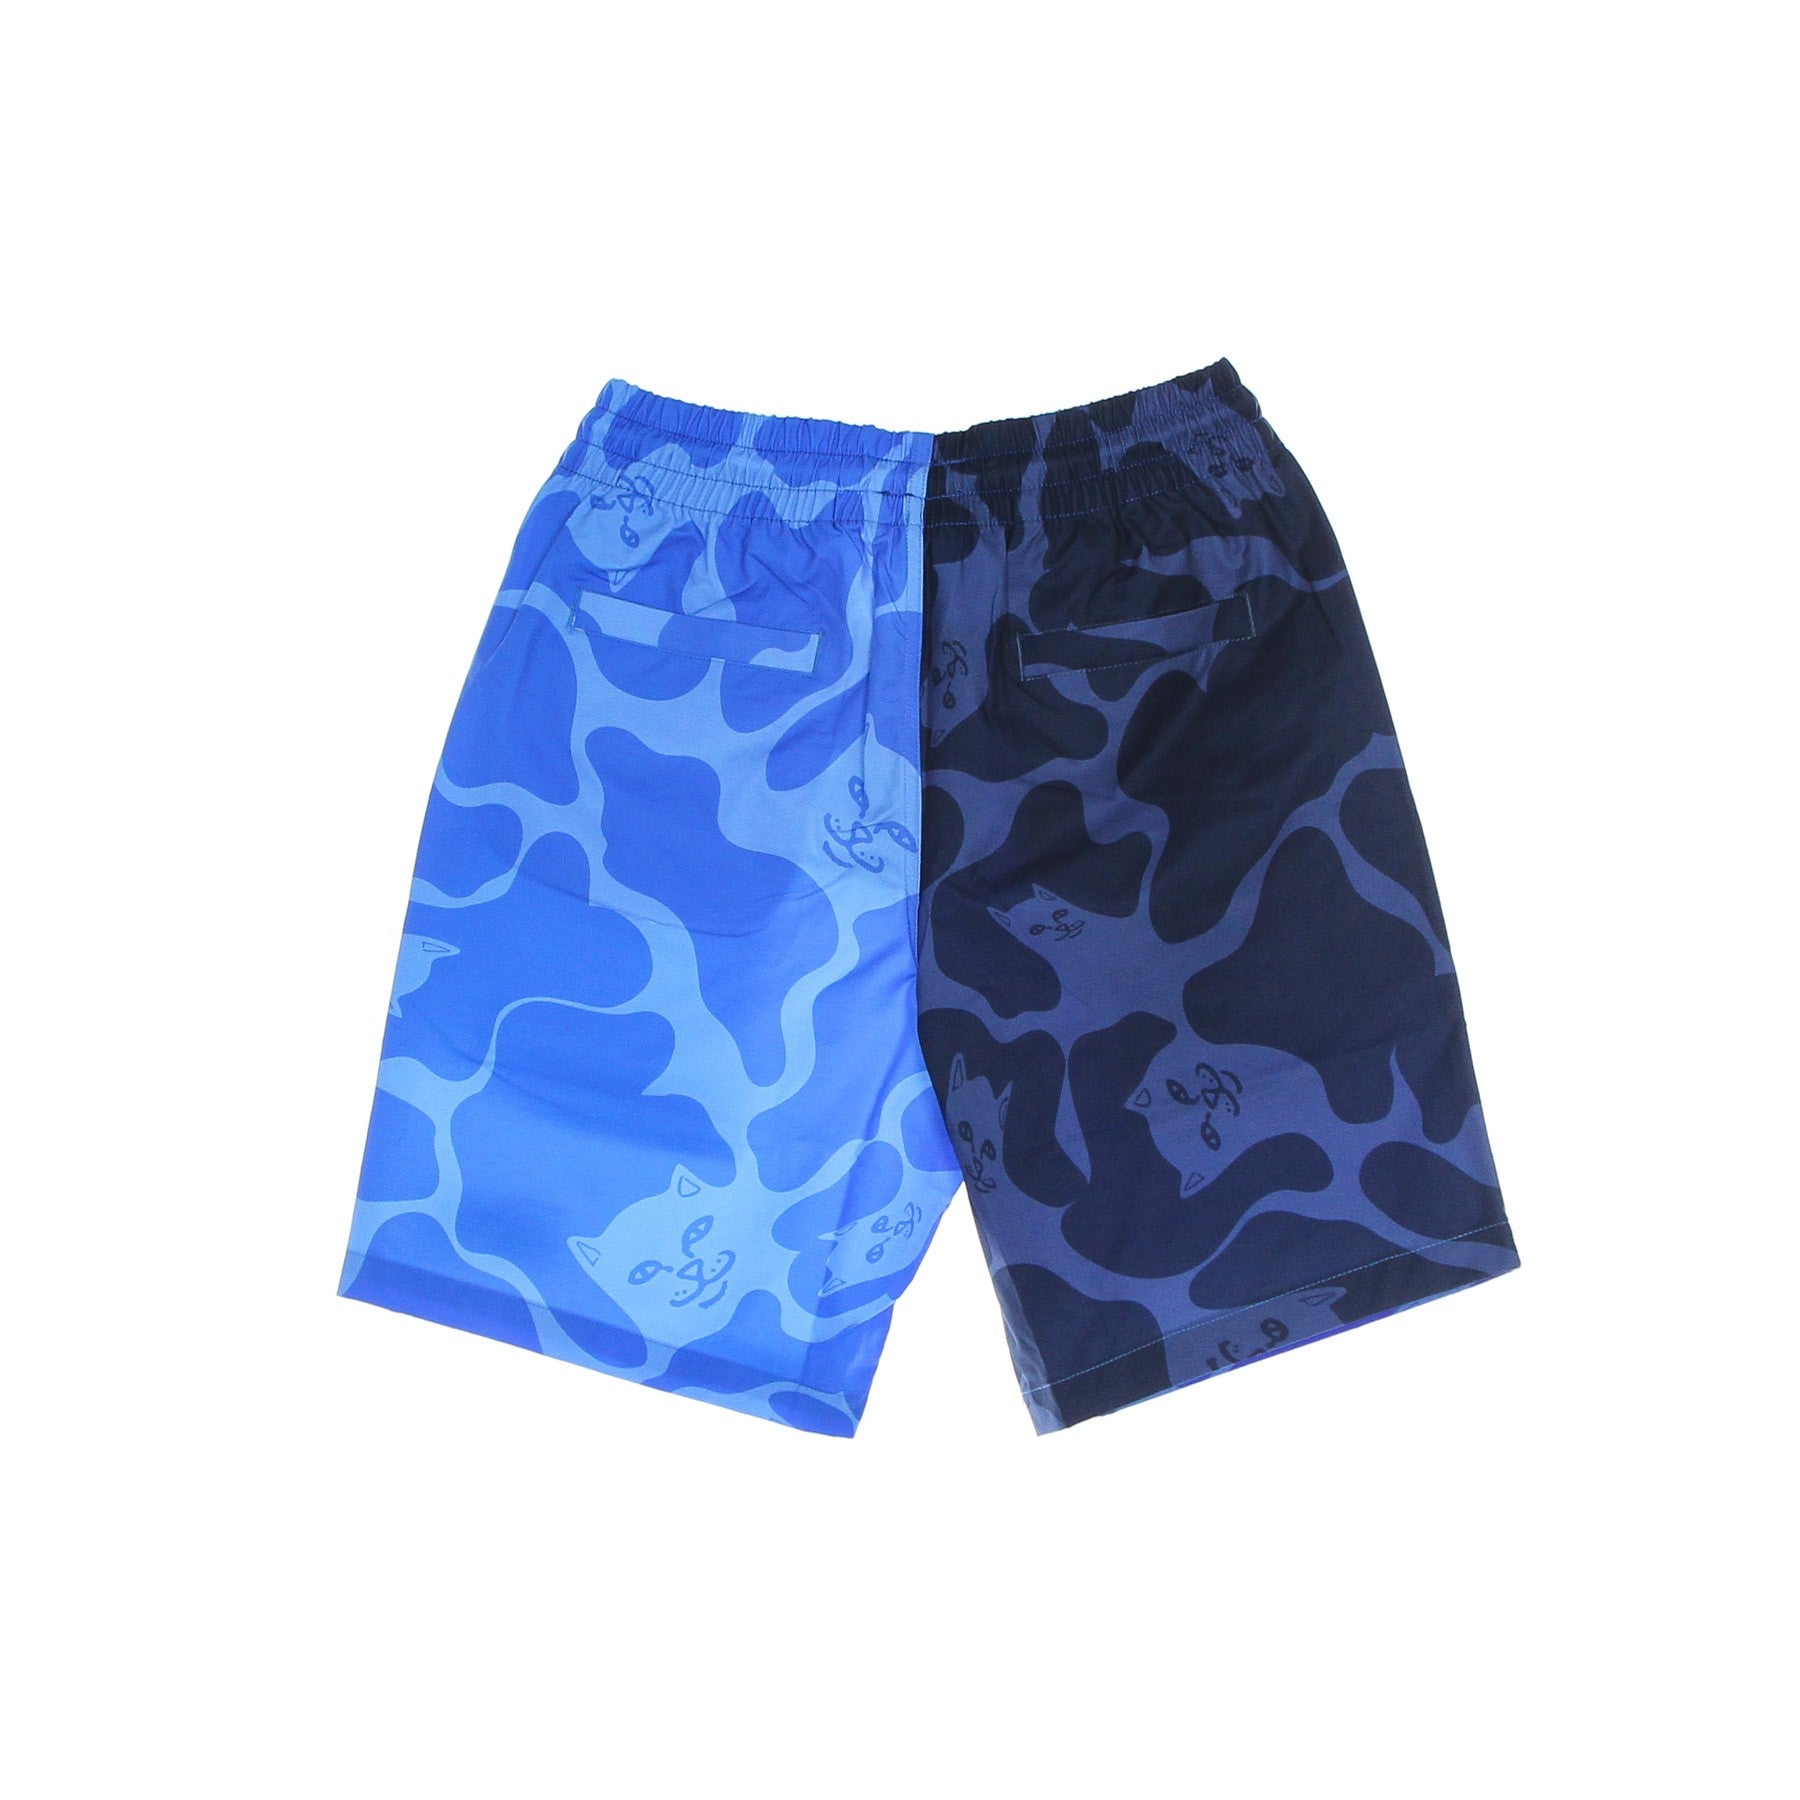 Soho Swim Shorts Men's Shorts Blue